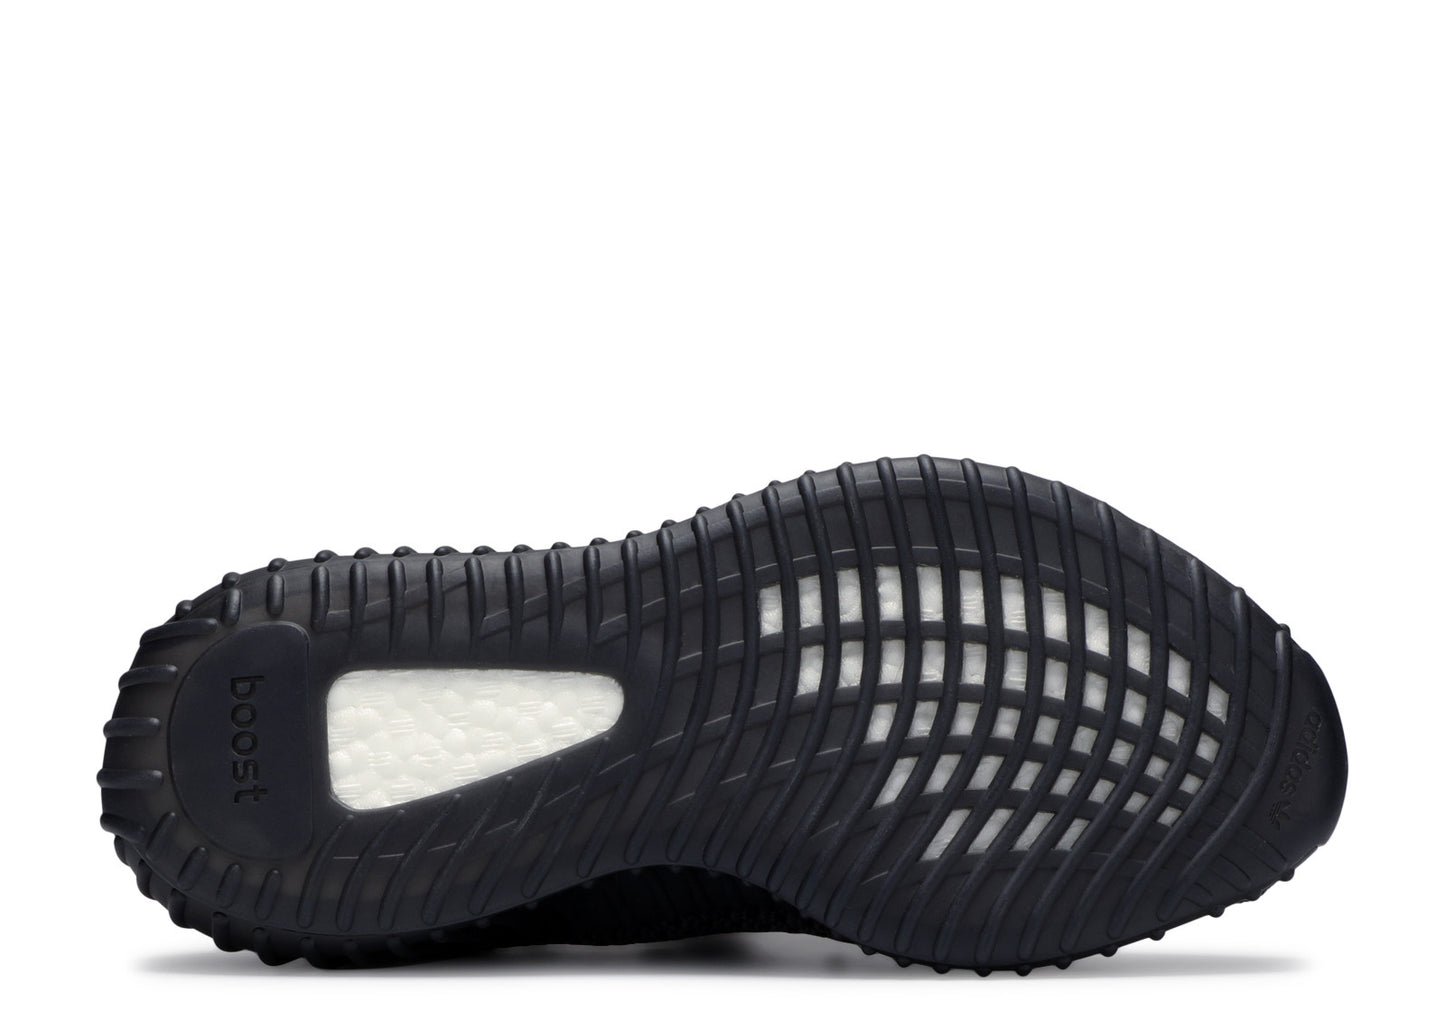 Adidas Yeezy Boost 350 V2 "Black Non-Reflective"